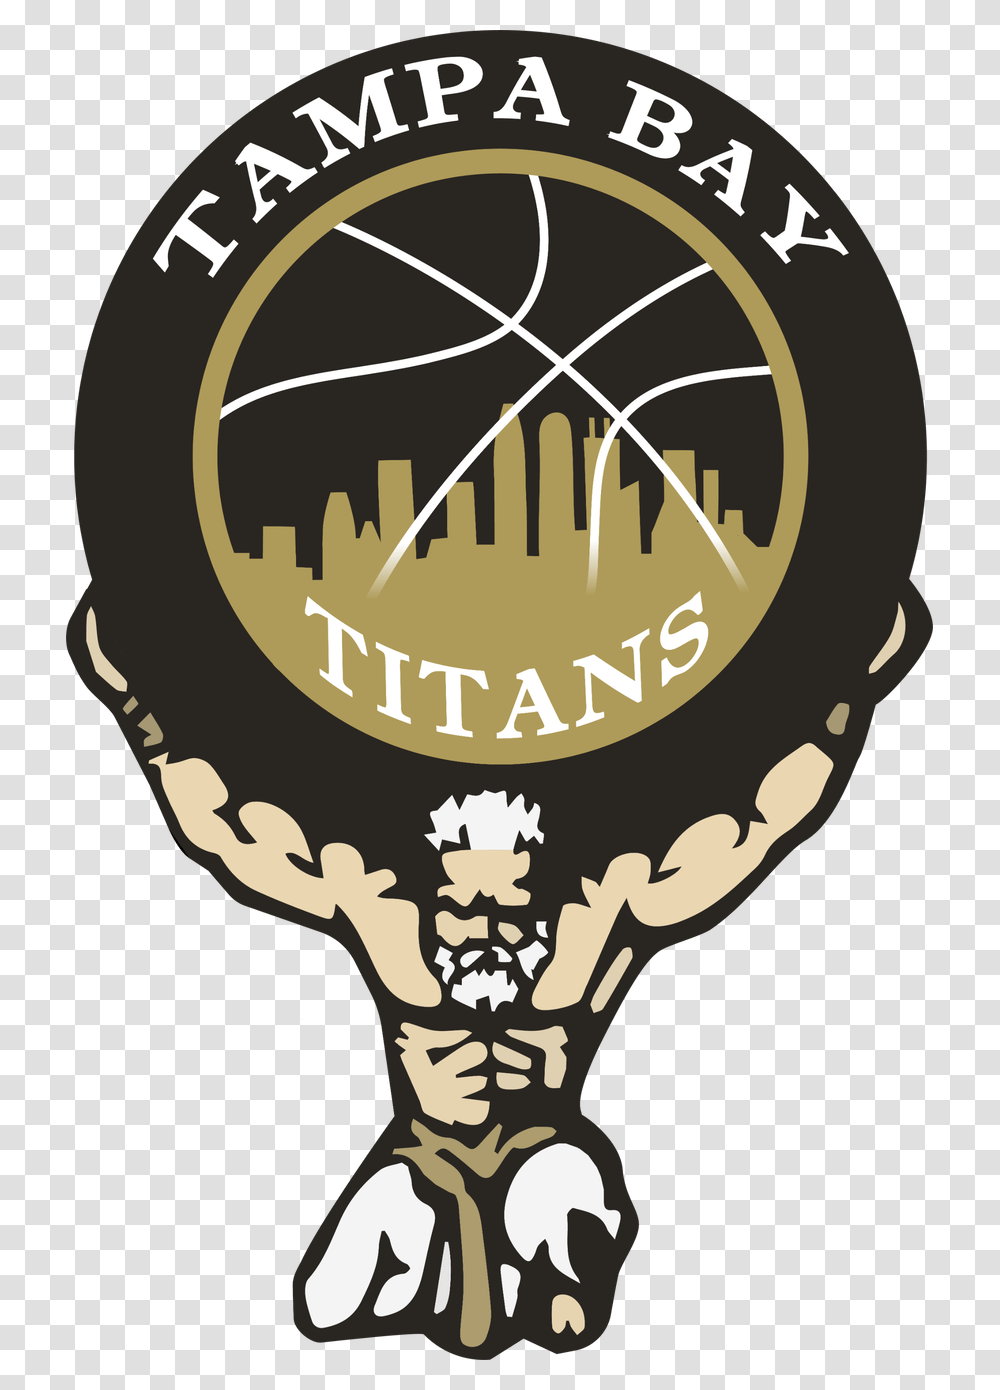 Tampa Bay Titans Logo, Trademark, Poster, Advertisement Transparent Png